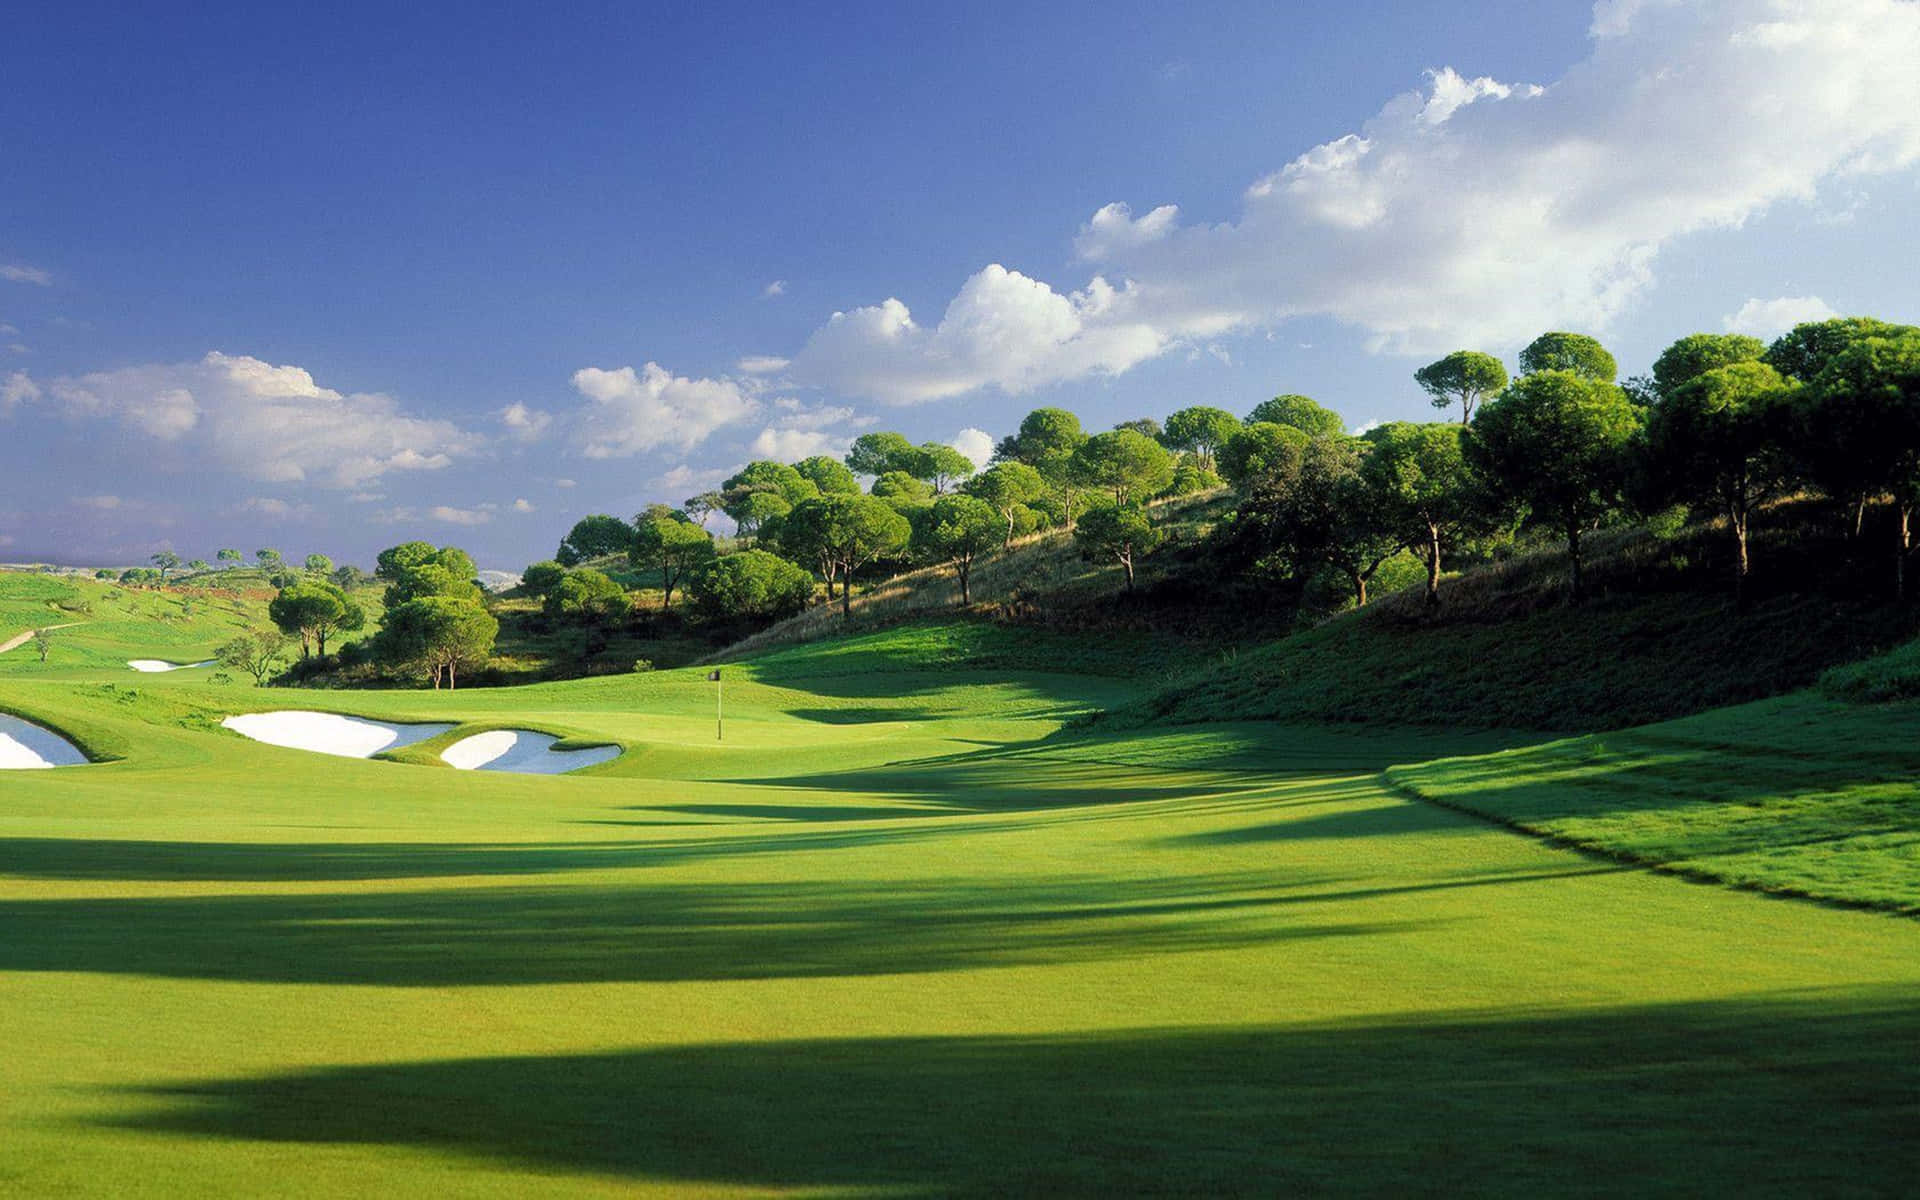 Impresionantepaisaje De Campo De Golf En 4k.